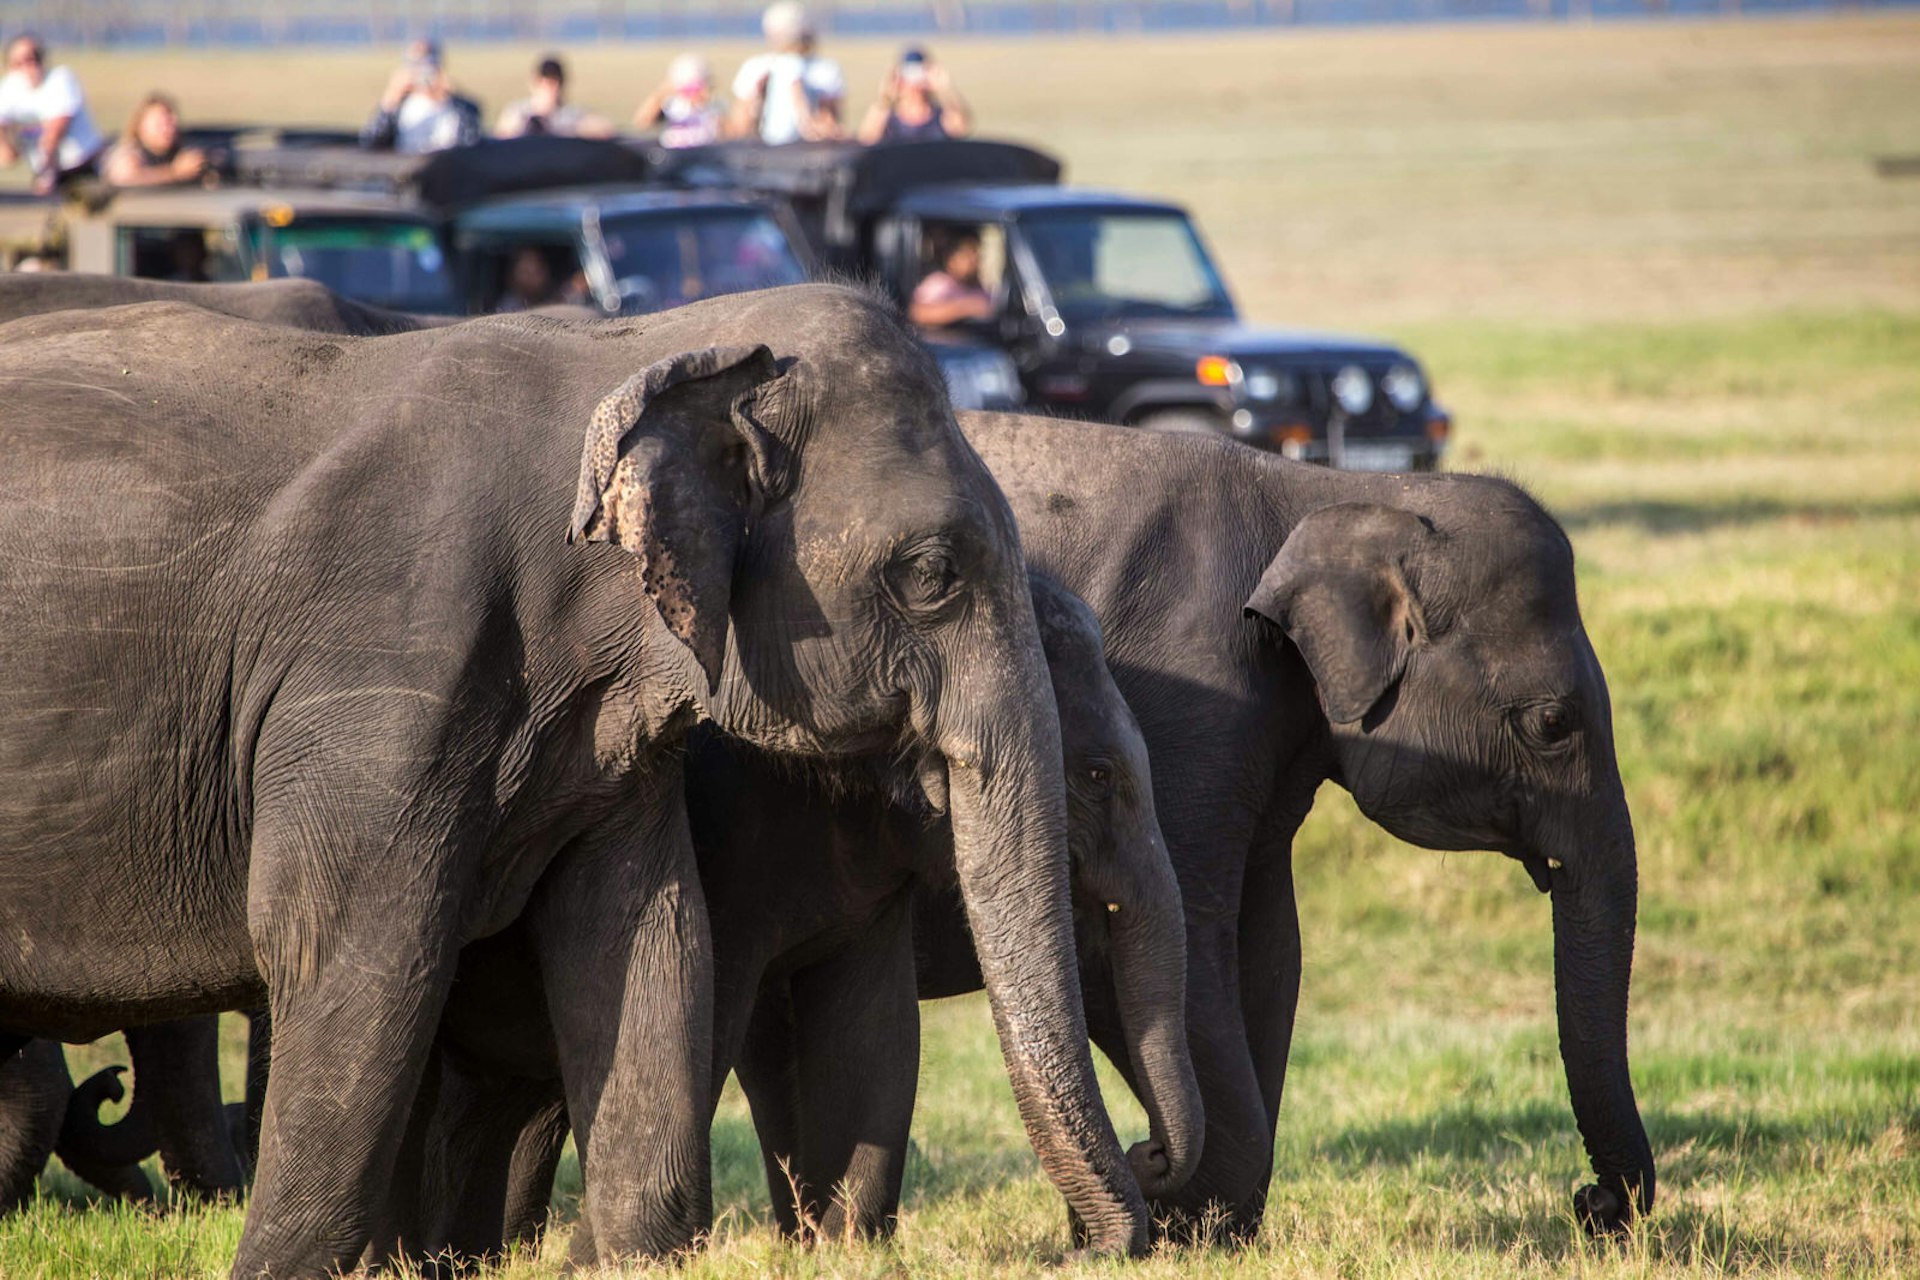 Elephants crowded by jeeps